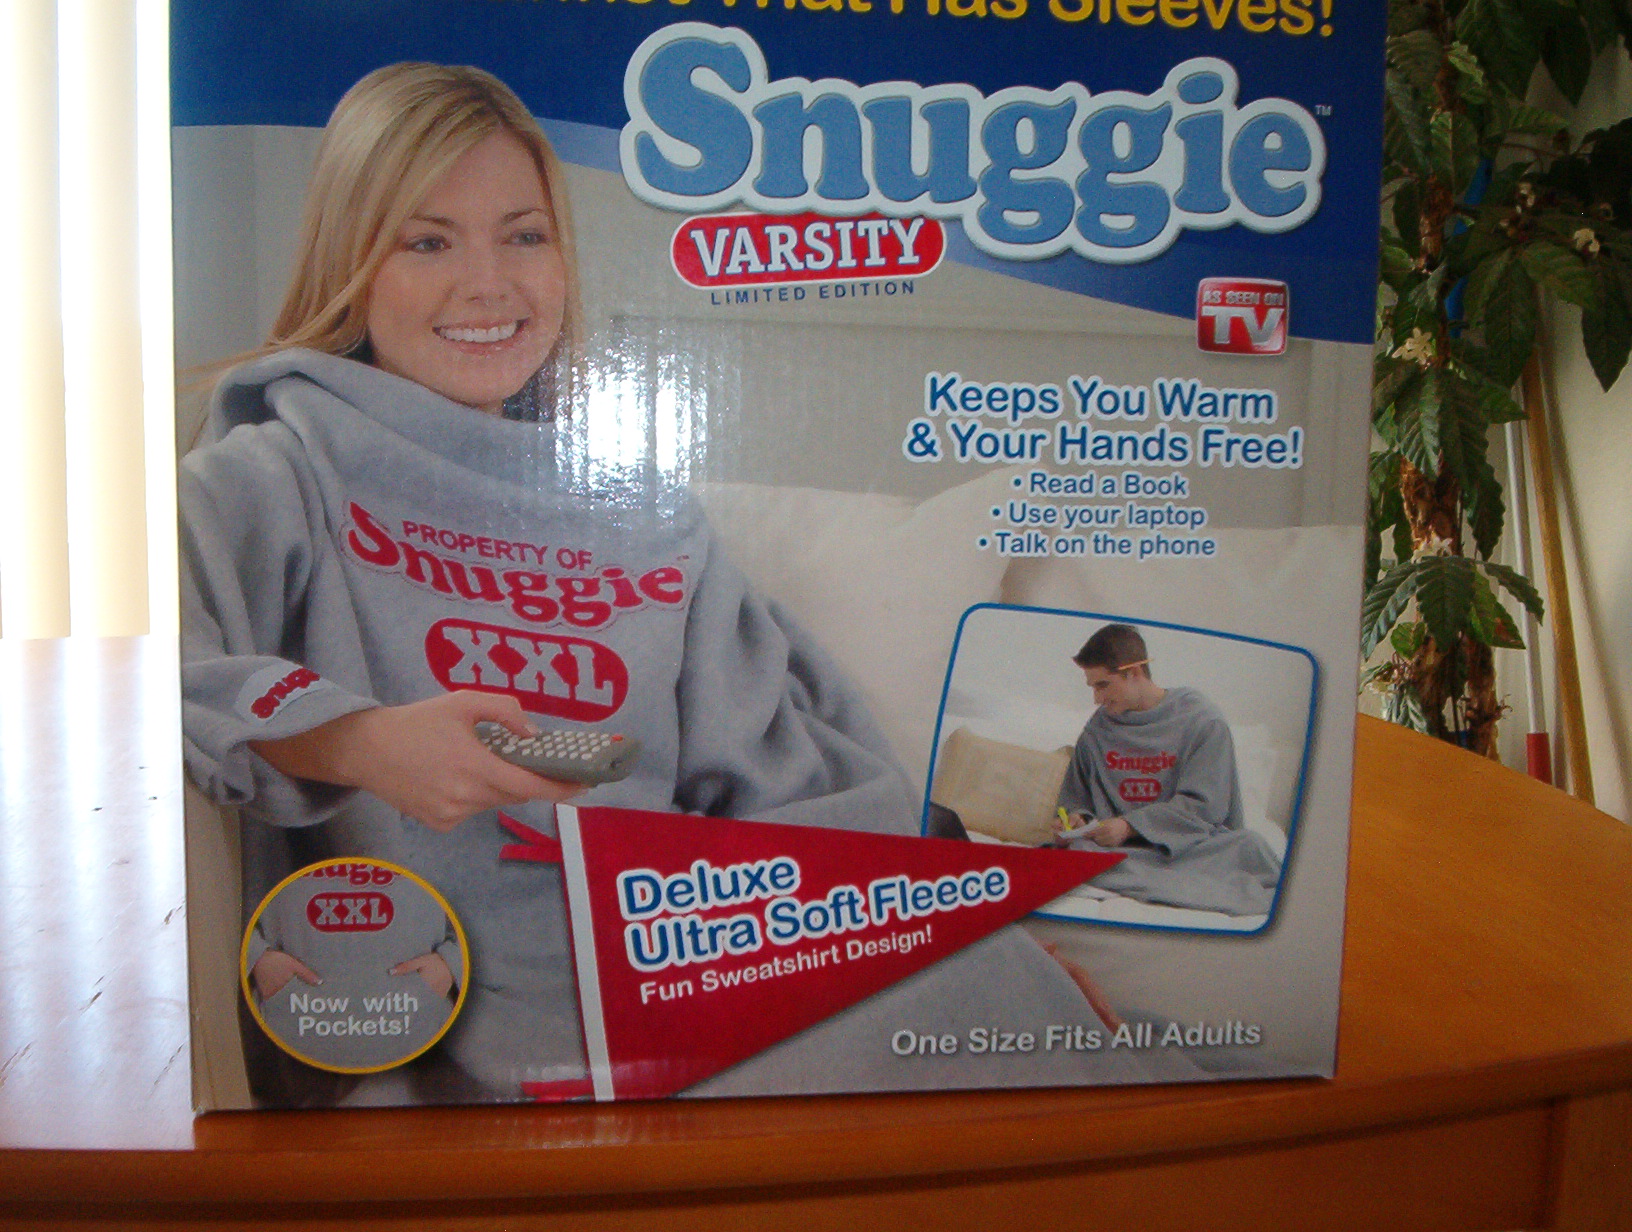 Snuggie Varsity Limited Edition